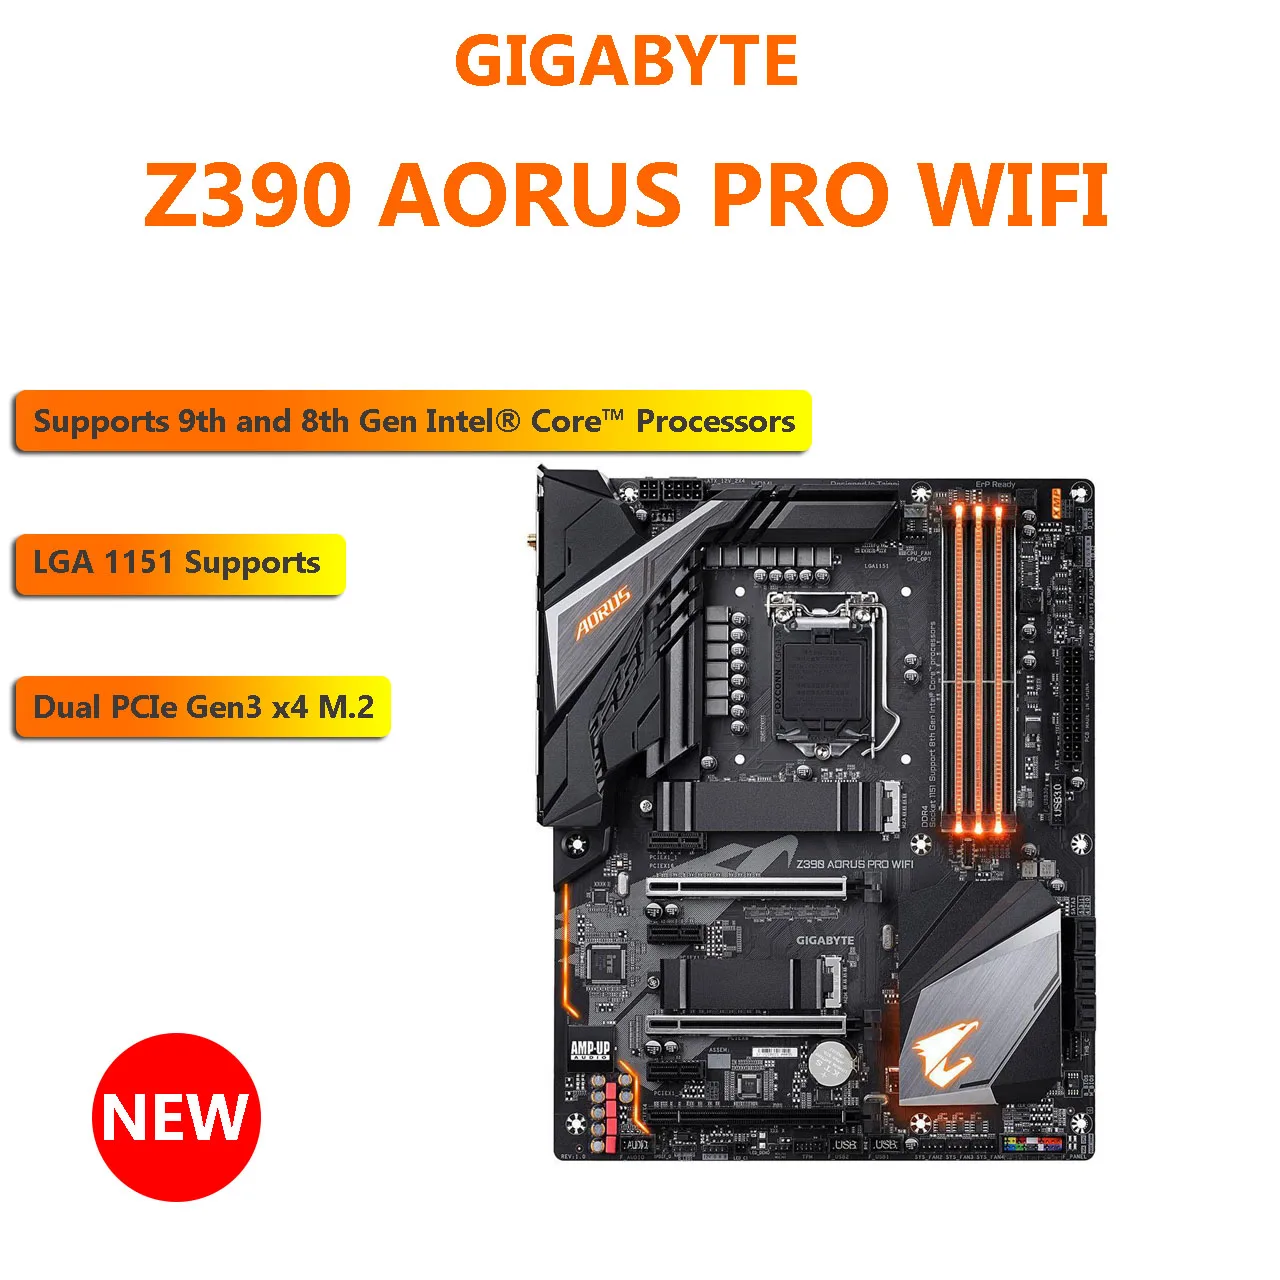 

GIGABYTE Z390 AORUS PRO WIFI LGA1151 (300 Series) Intel Z390 DDR4 SATA 6Gb/s ATX Intel Desktop Computer Gaming Motherboard New